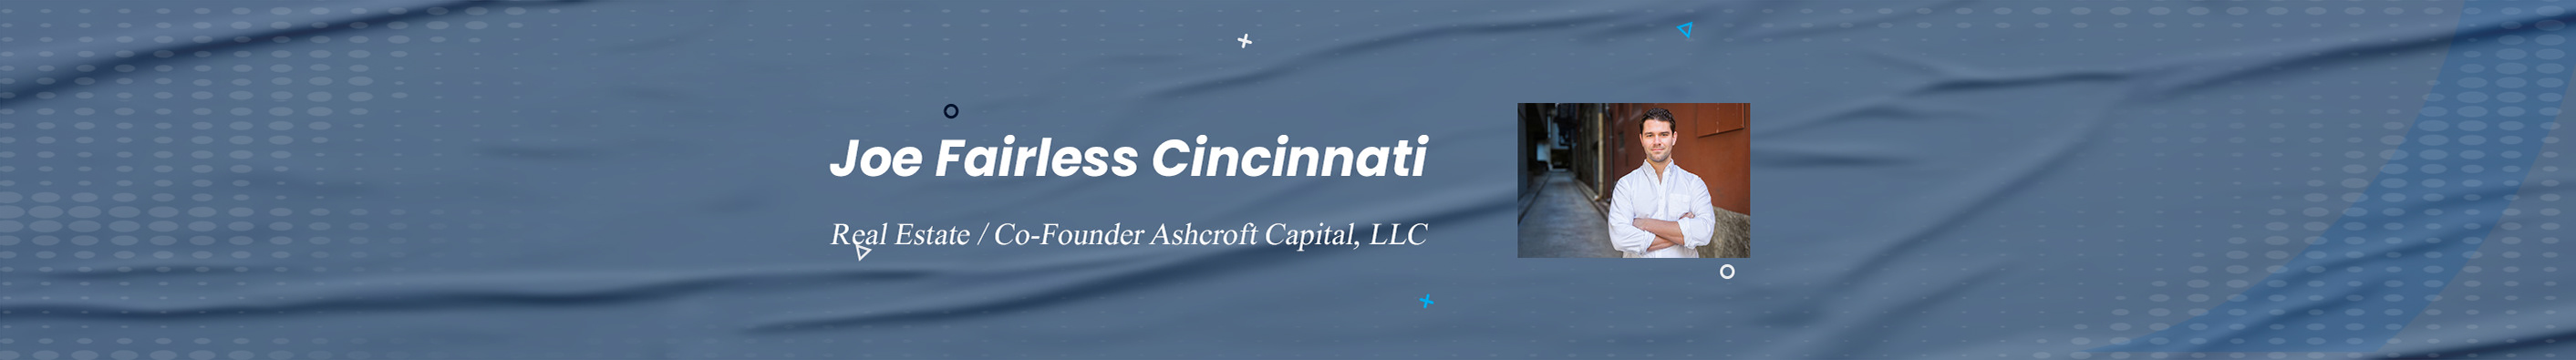 Joe Fairless Cincinnati's profile banner